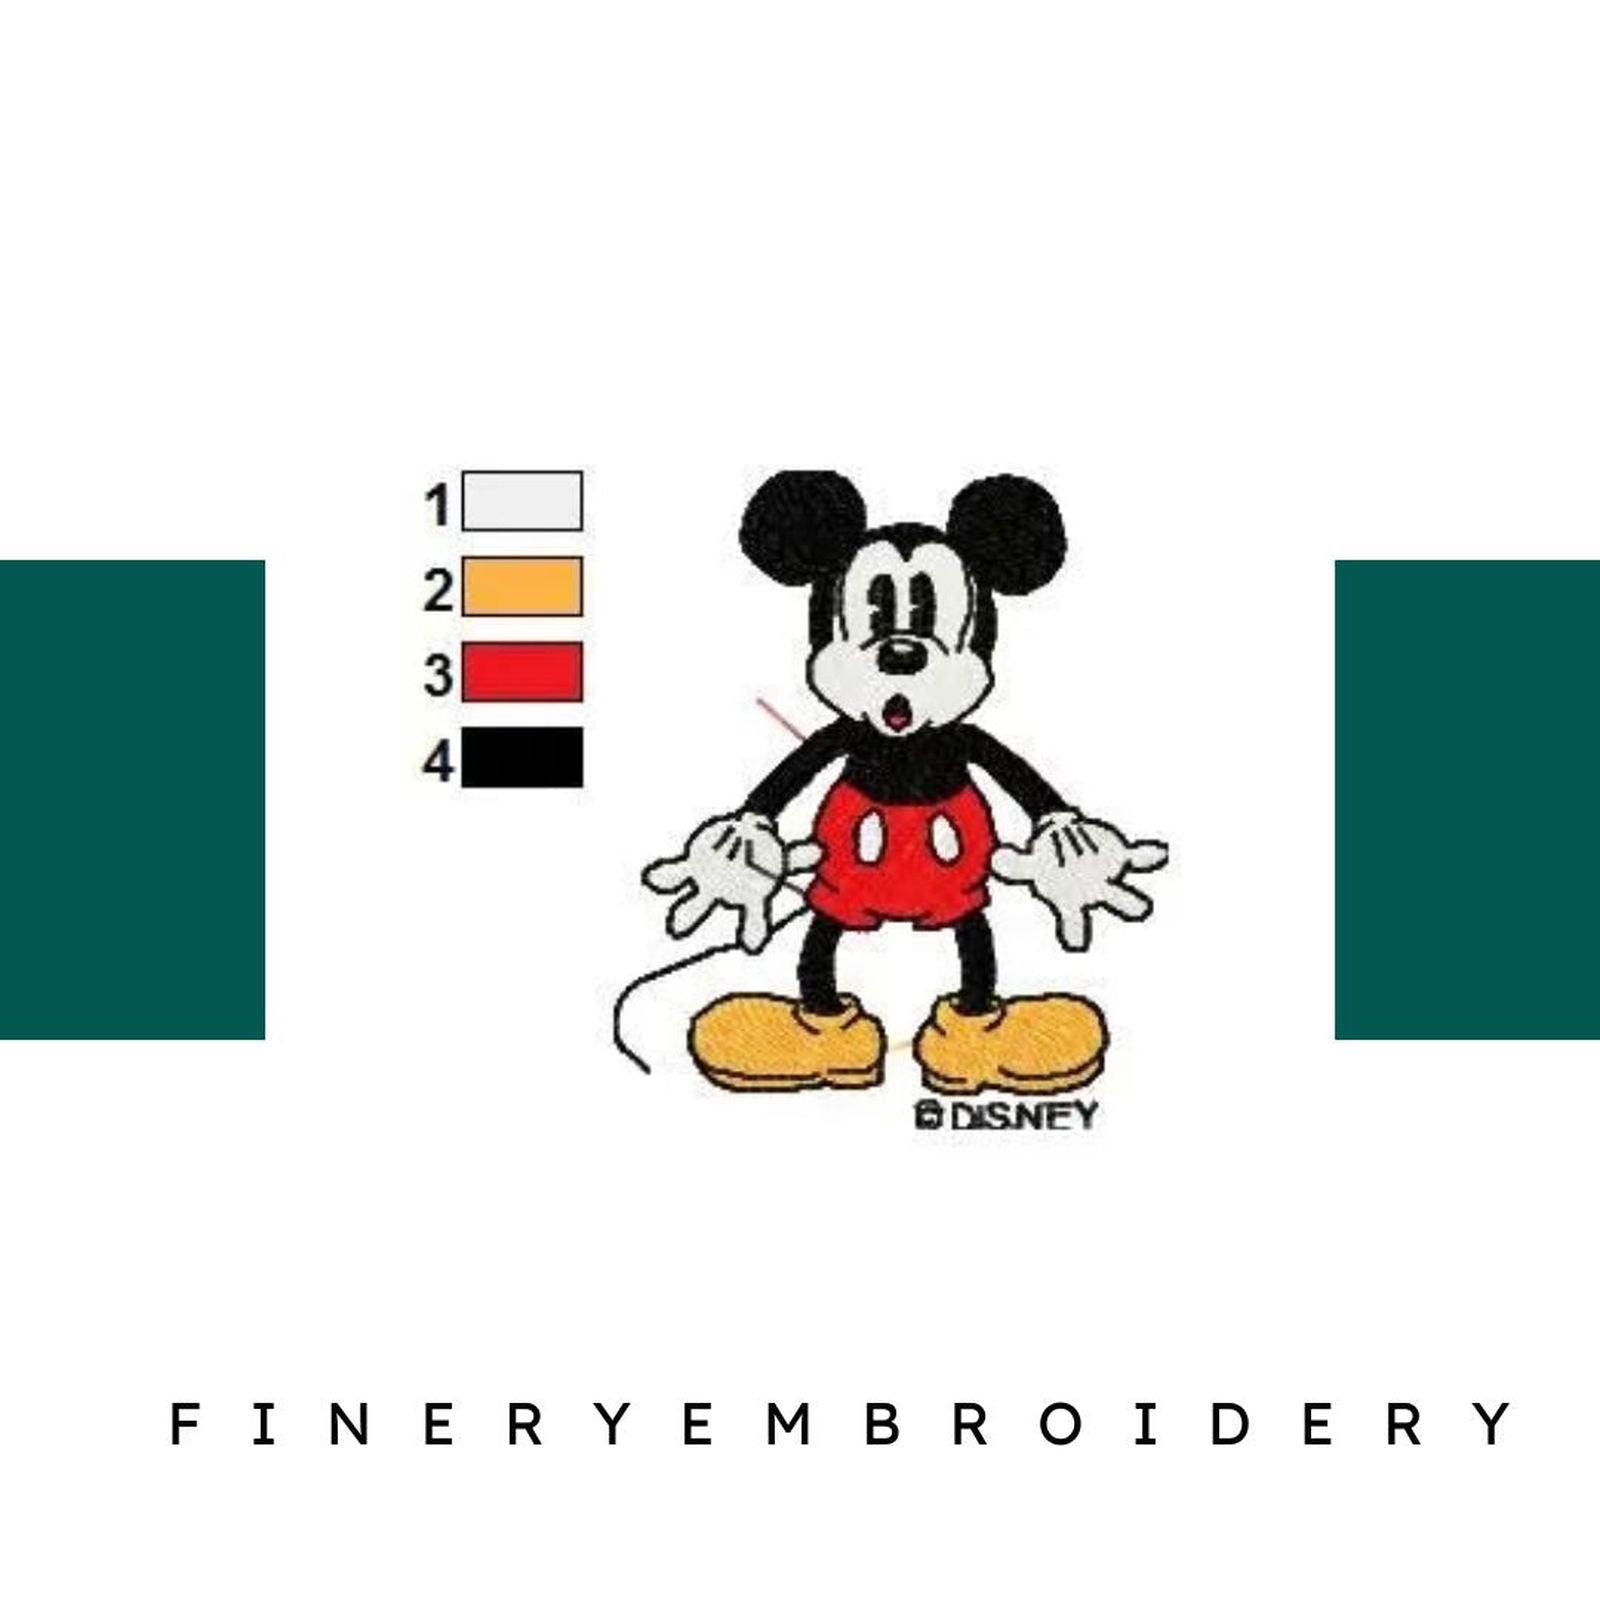 MICKEY MINNIE 046 - Embroidery Design - FineryEmbroidery